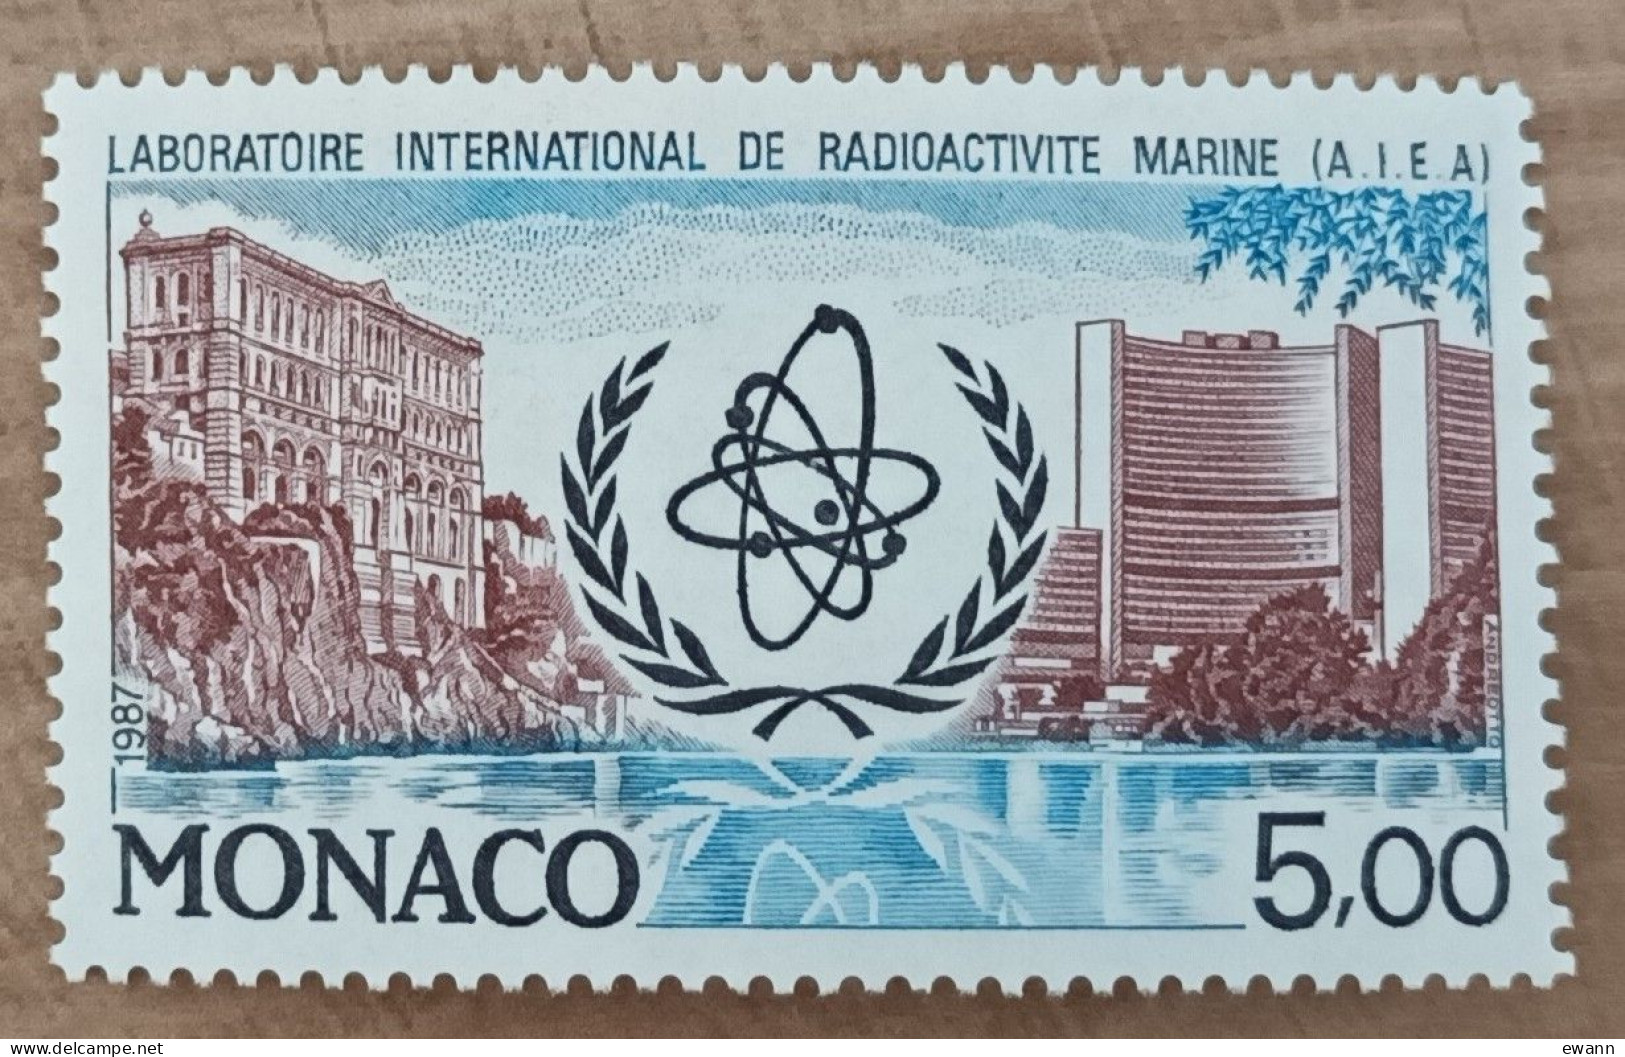 Monaco - YT N°1602 - Laboratoire International De Radioactivité Marine - 1987 - Neuf - Ongebruikt